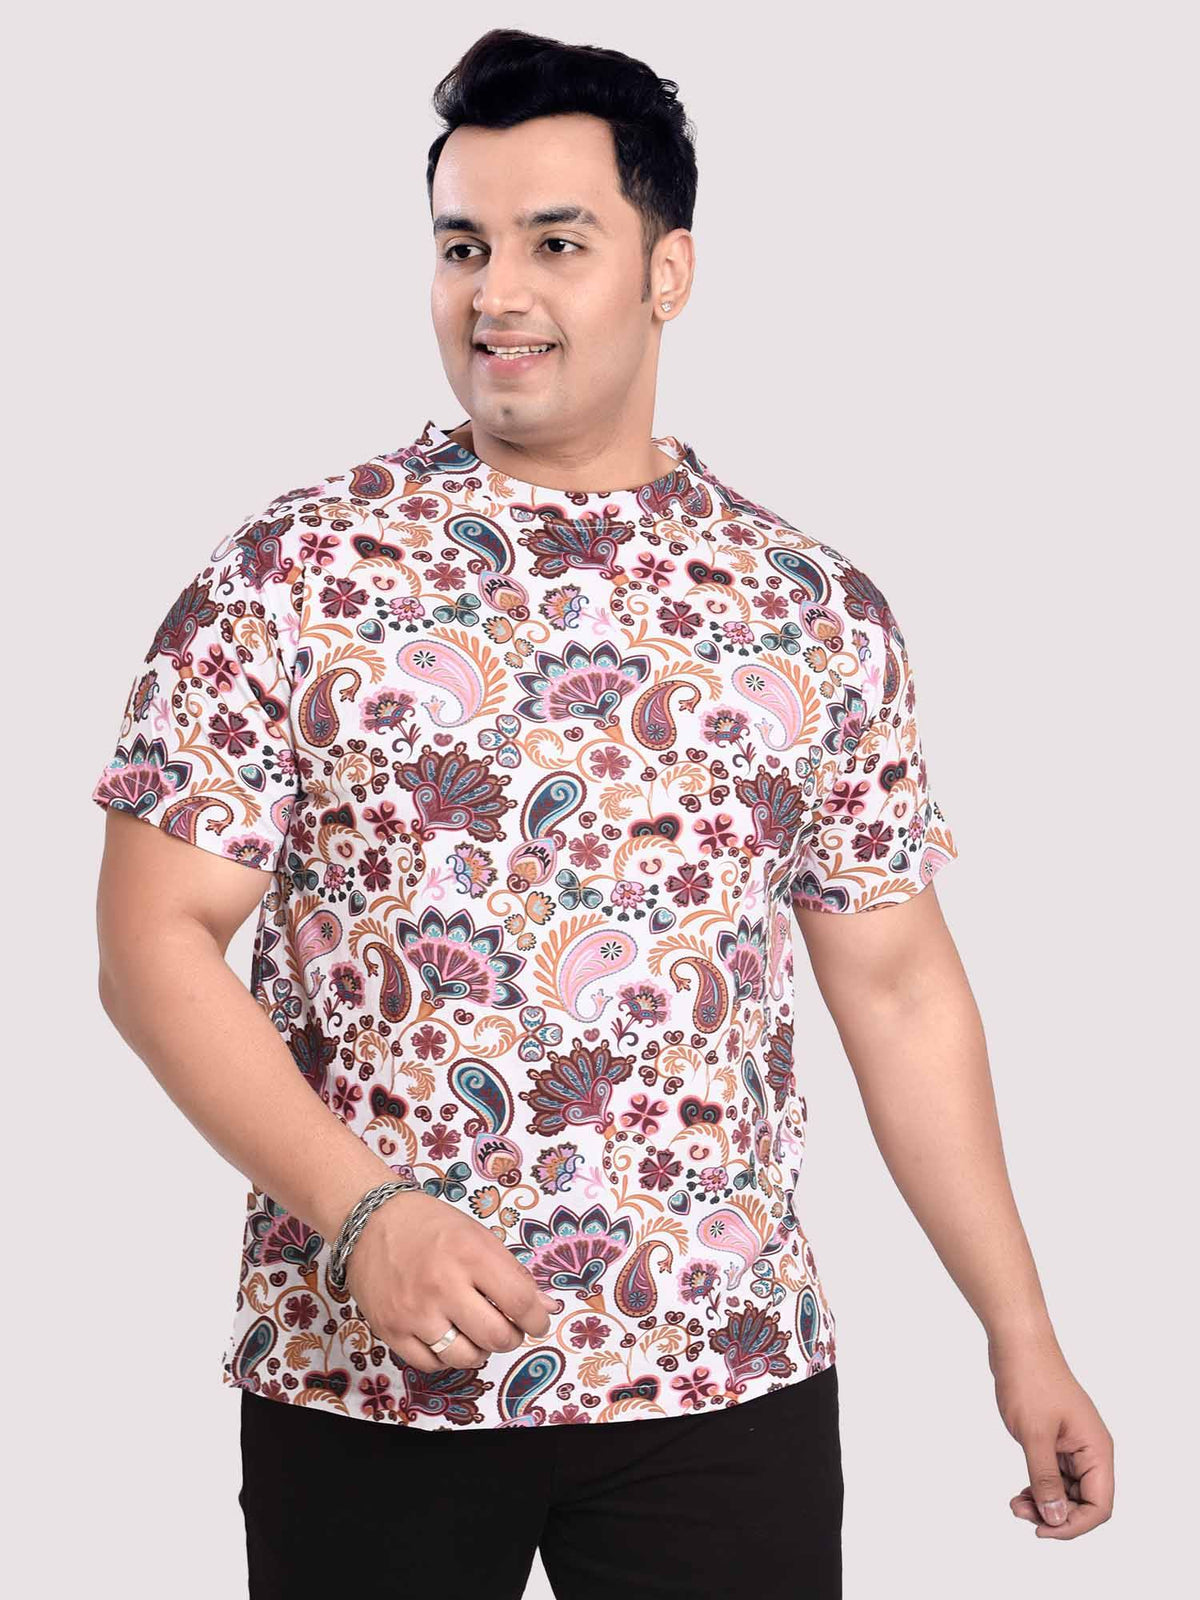 Paisely Digital Printed Round Neck T-Shirt Men's Plus Size - Guniaa Fashions